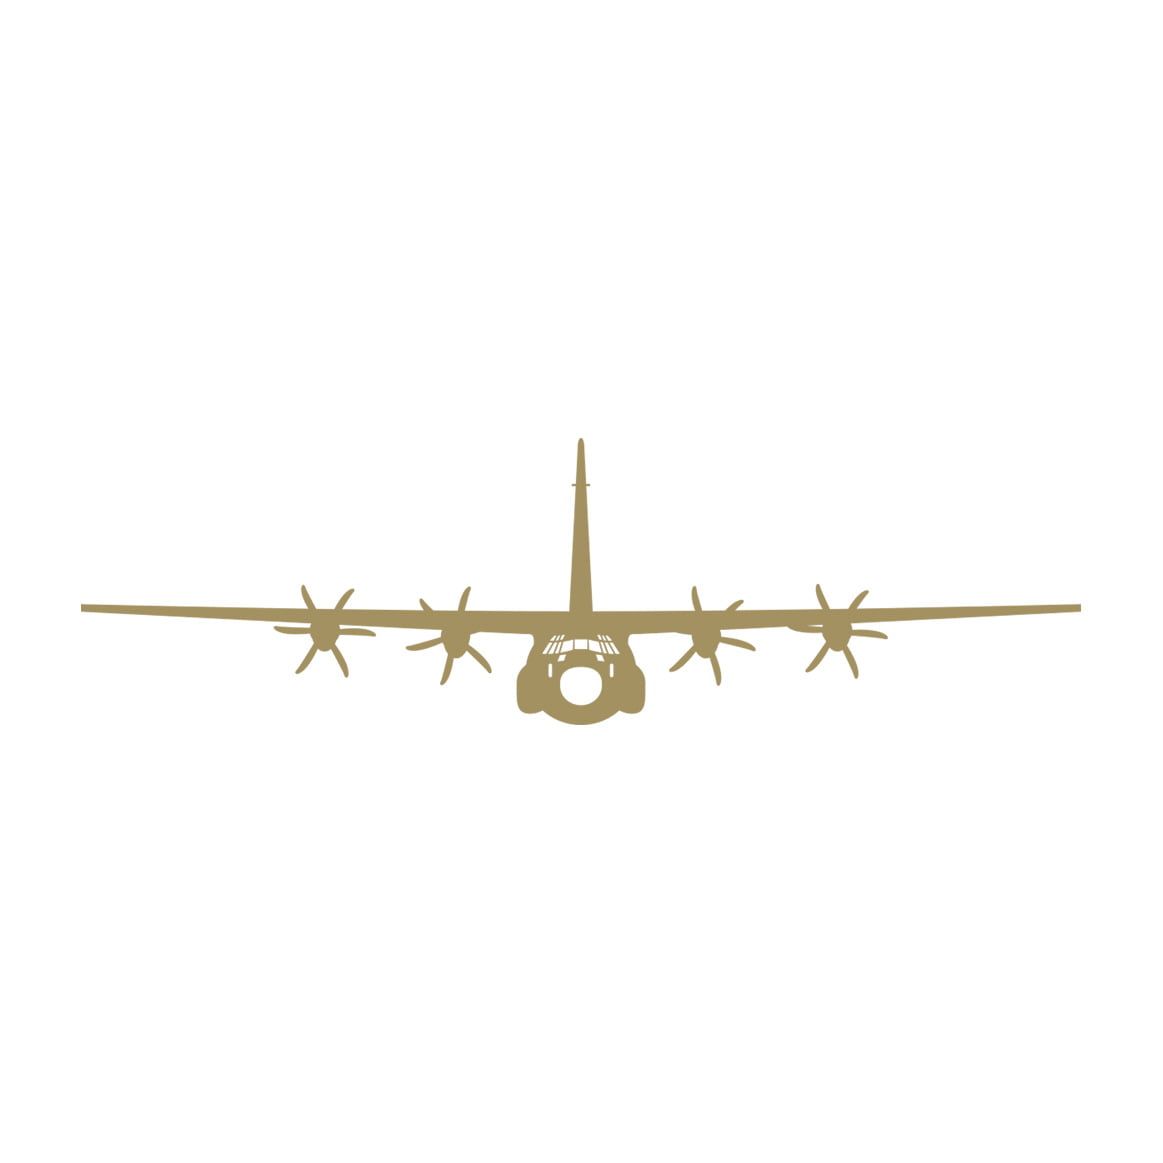 C-130H Decal Mini Jet Cup Decal / C130H Decal / C130 Vinyl 